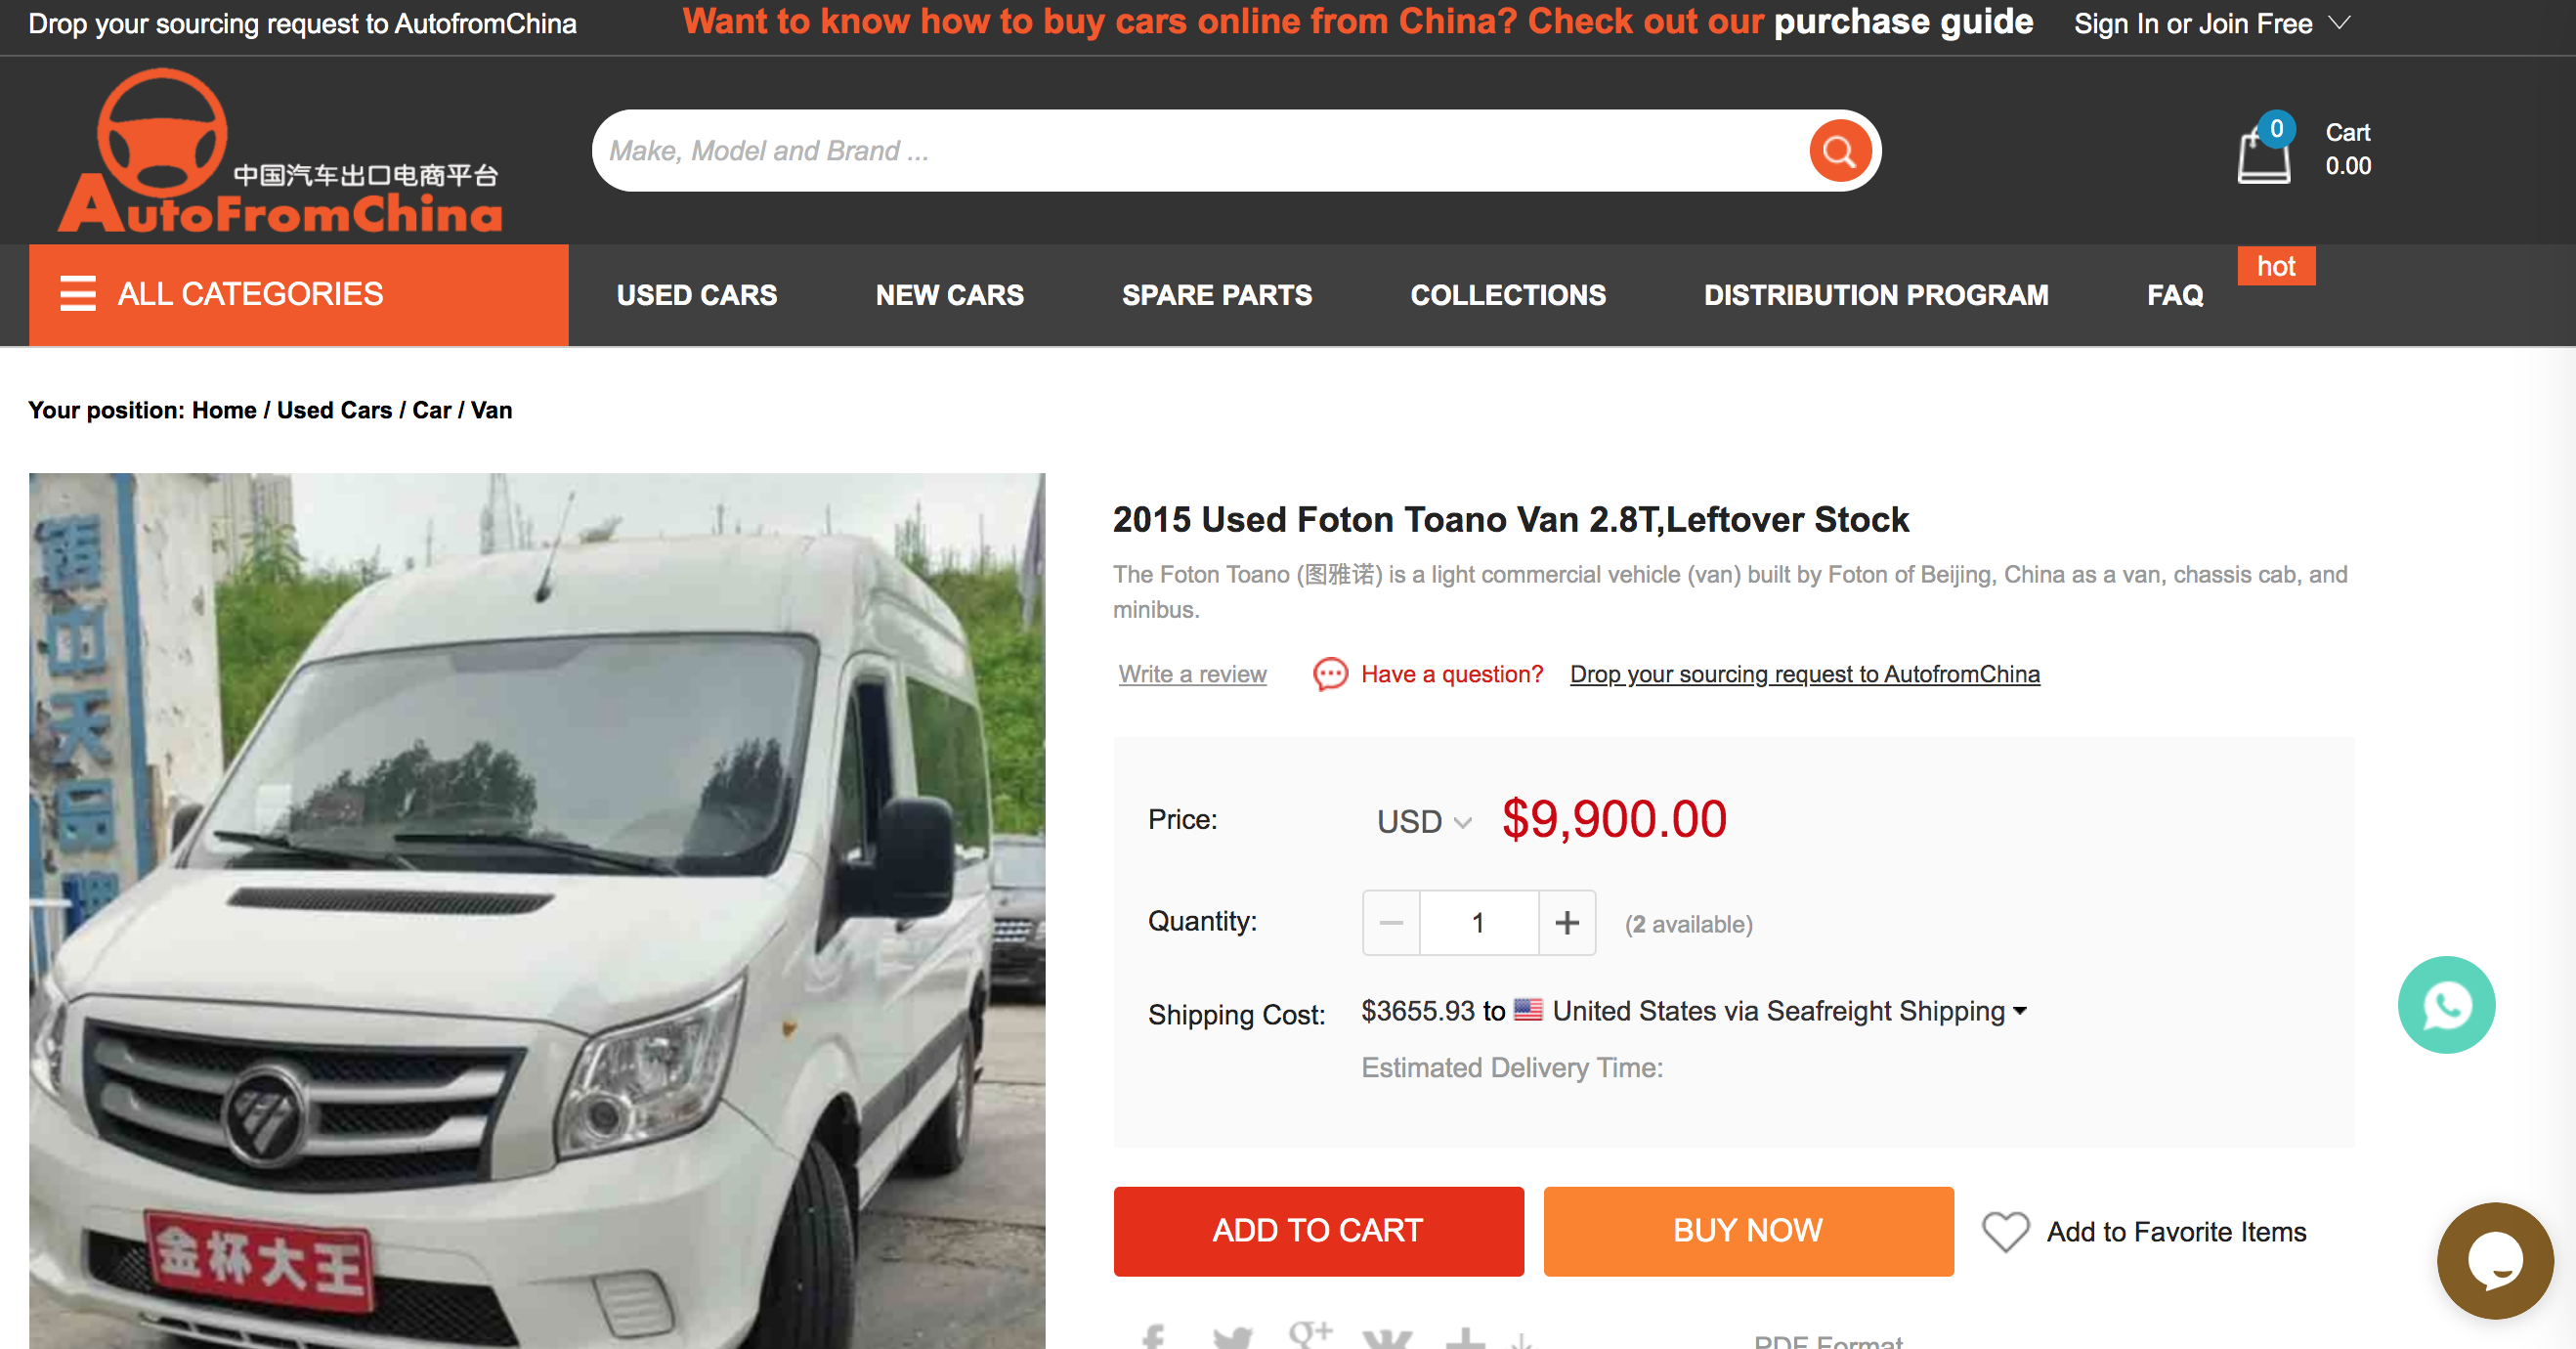 2015 Used Foton Toano Van 2.8T,Leftover Stock